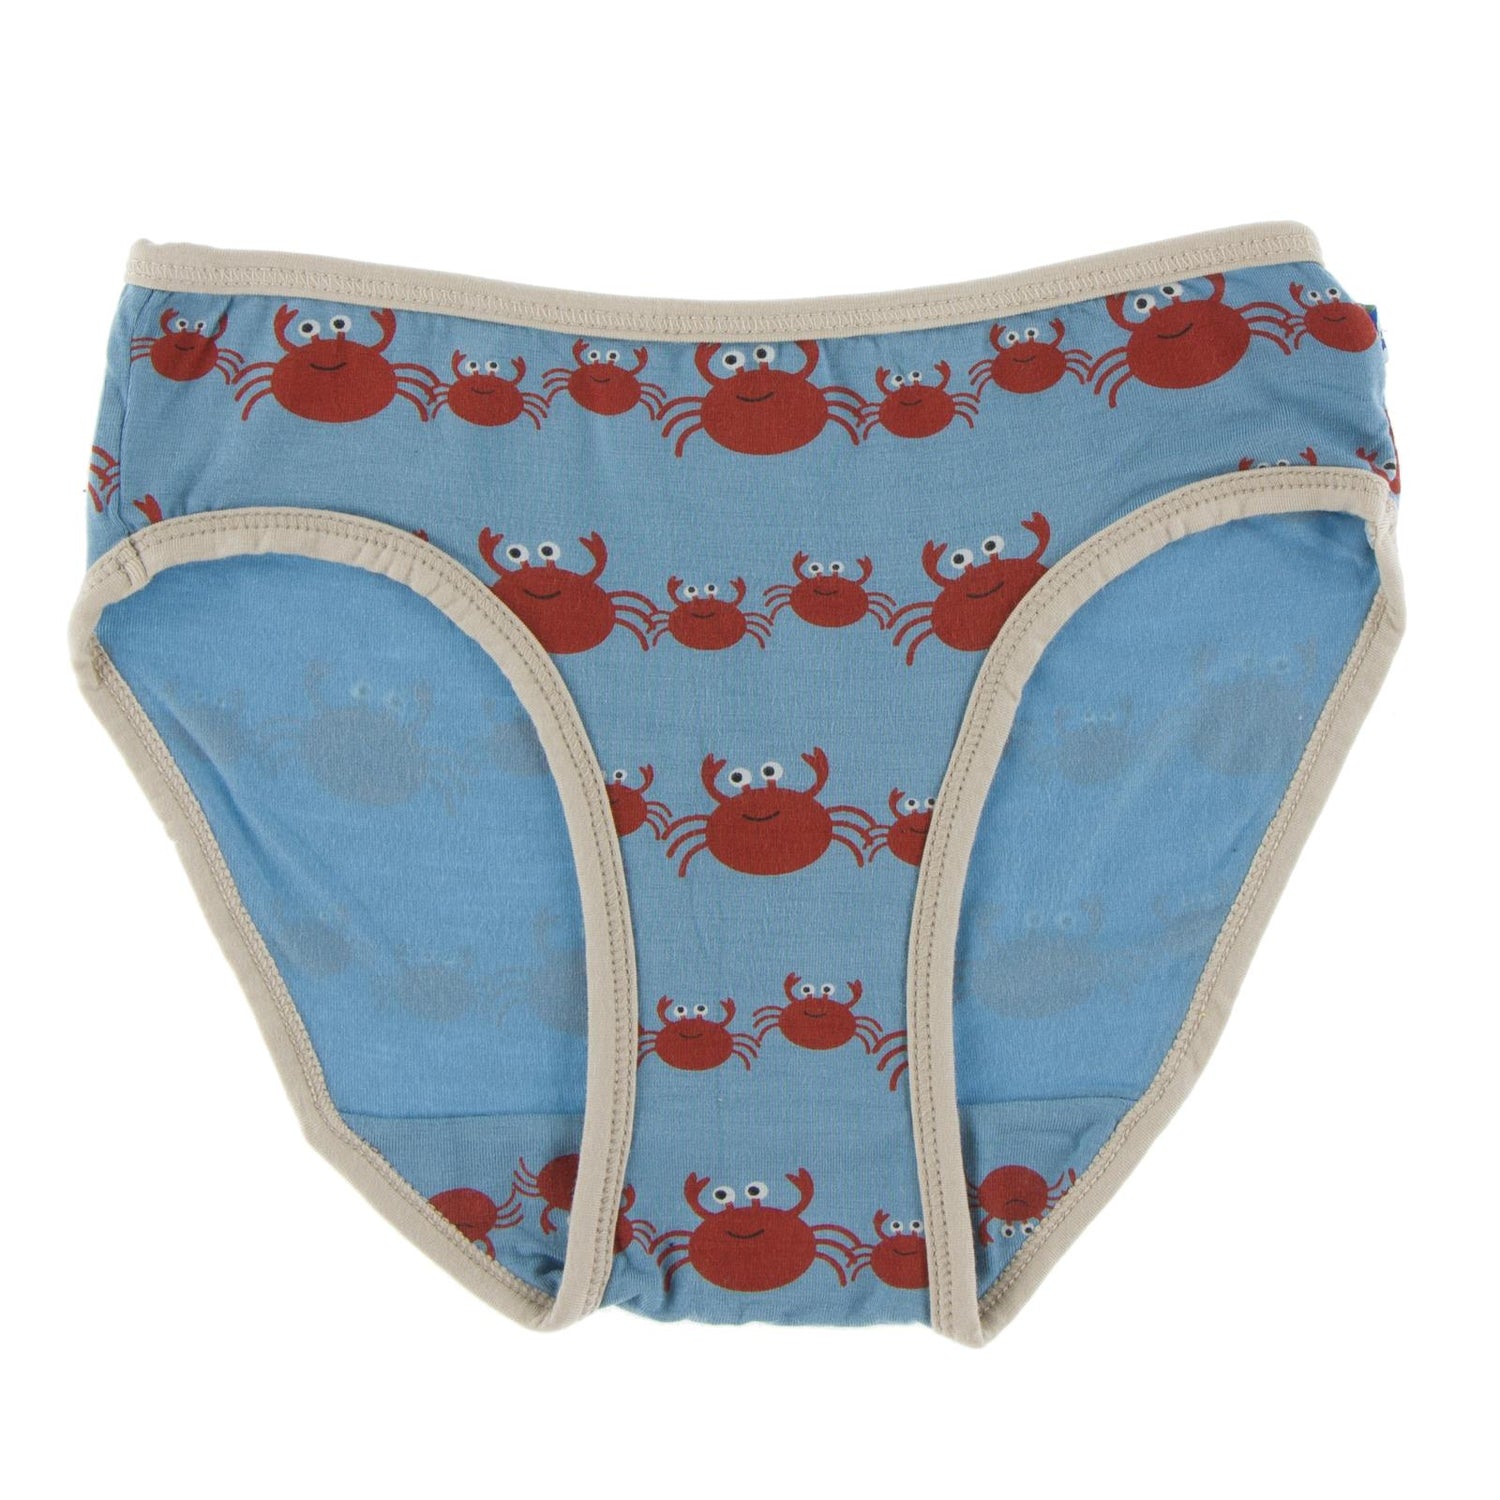 Print Underwear in Blue Moon Crab Family with Burlap Trim